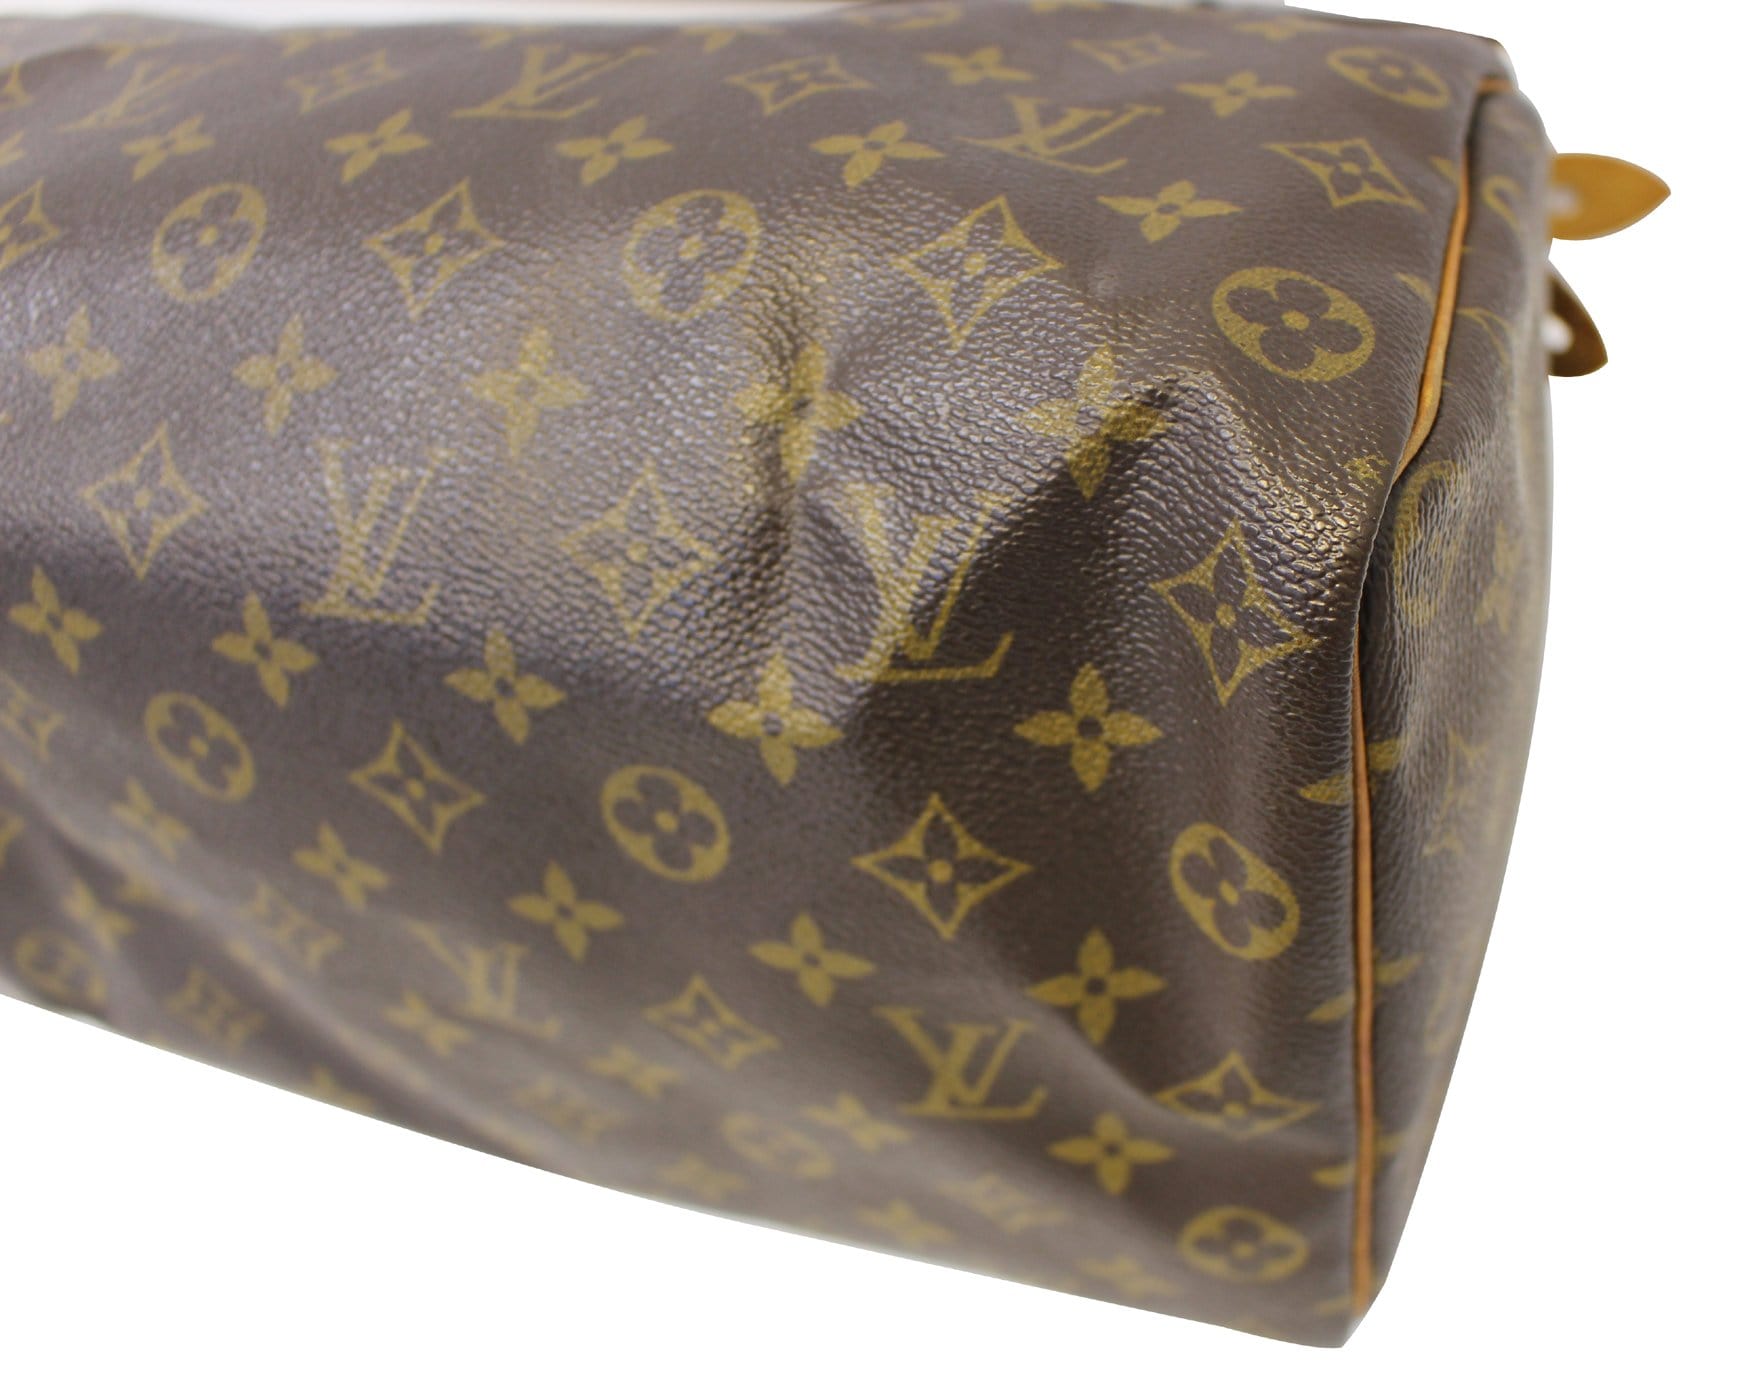 Authenticated Used Louis Vuitton Speedy 35 Monogram M41524 Handbag